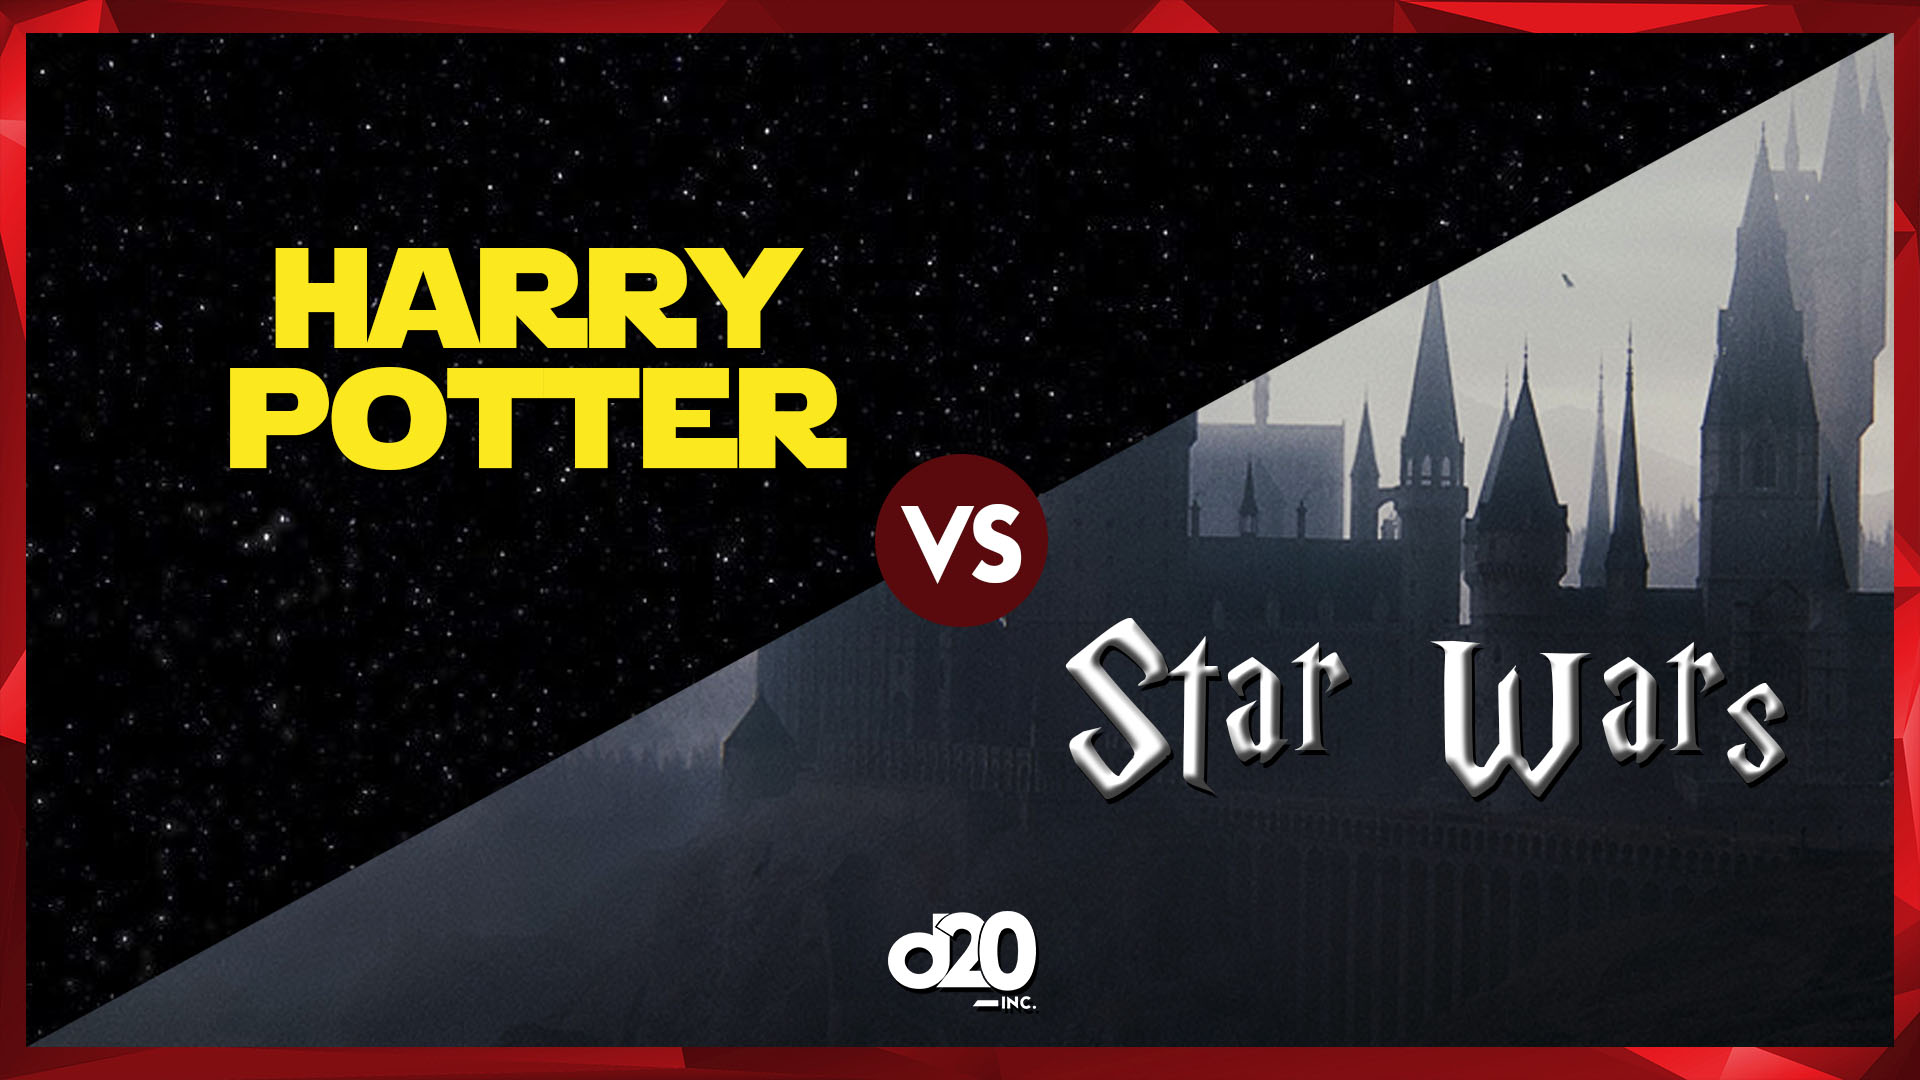 As Semelhanças entre Harry Potter e Star Wars | D20 Lab 59